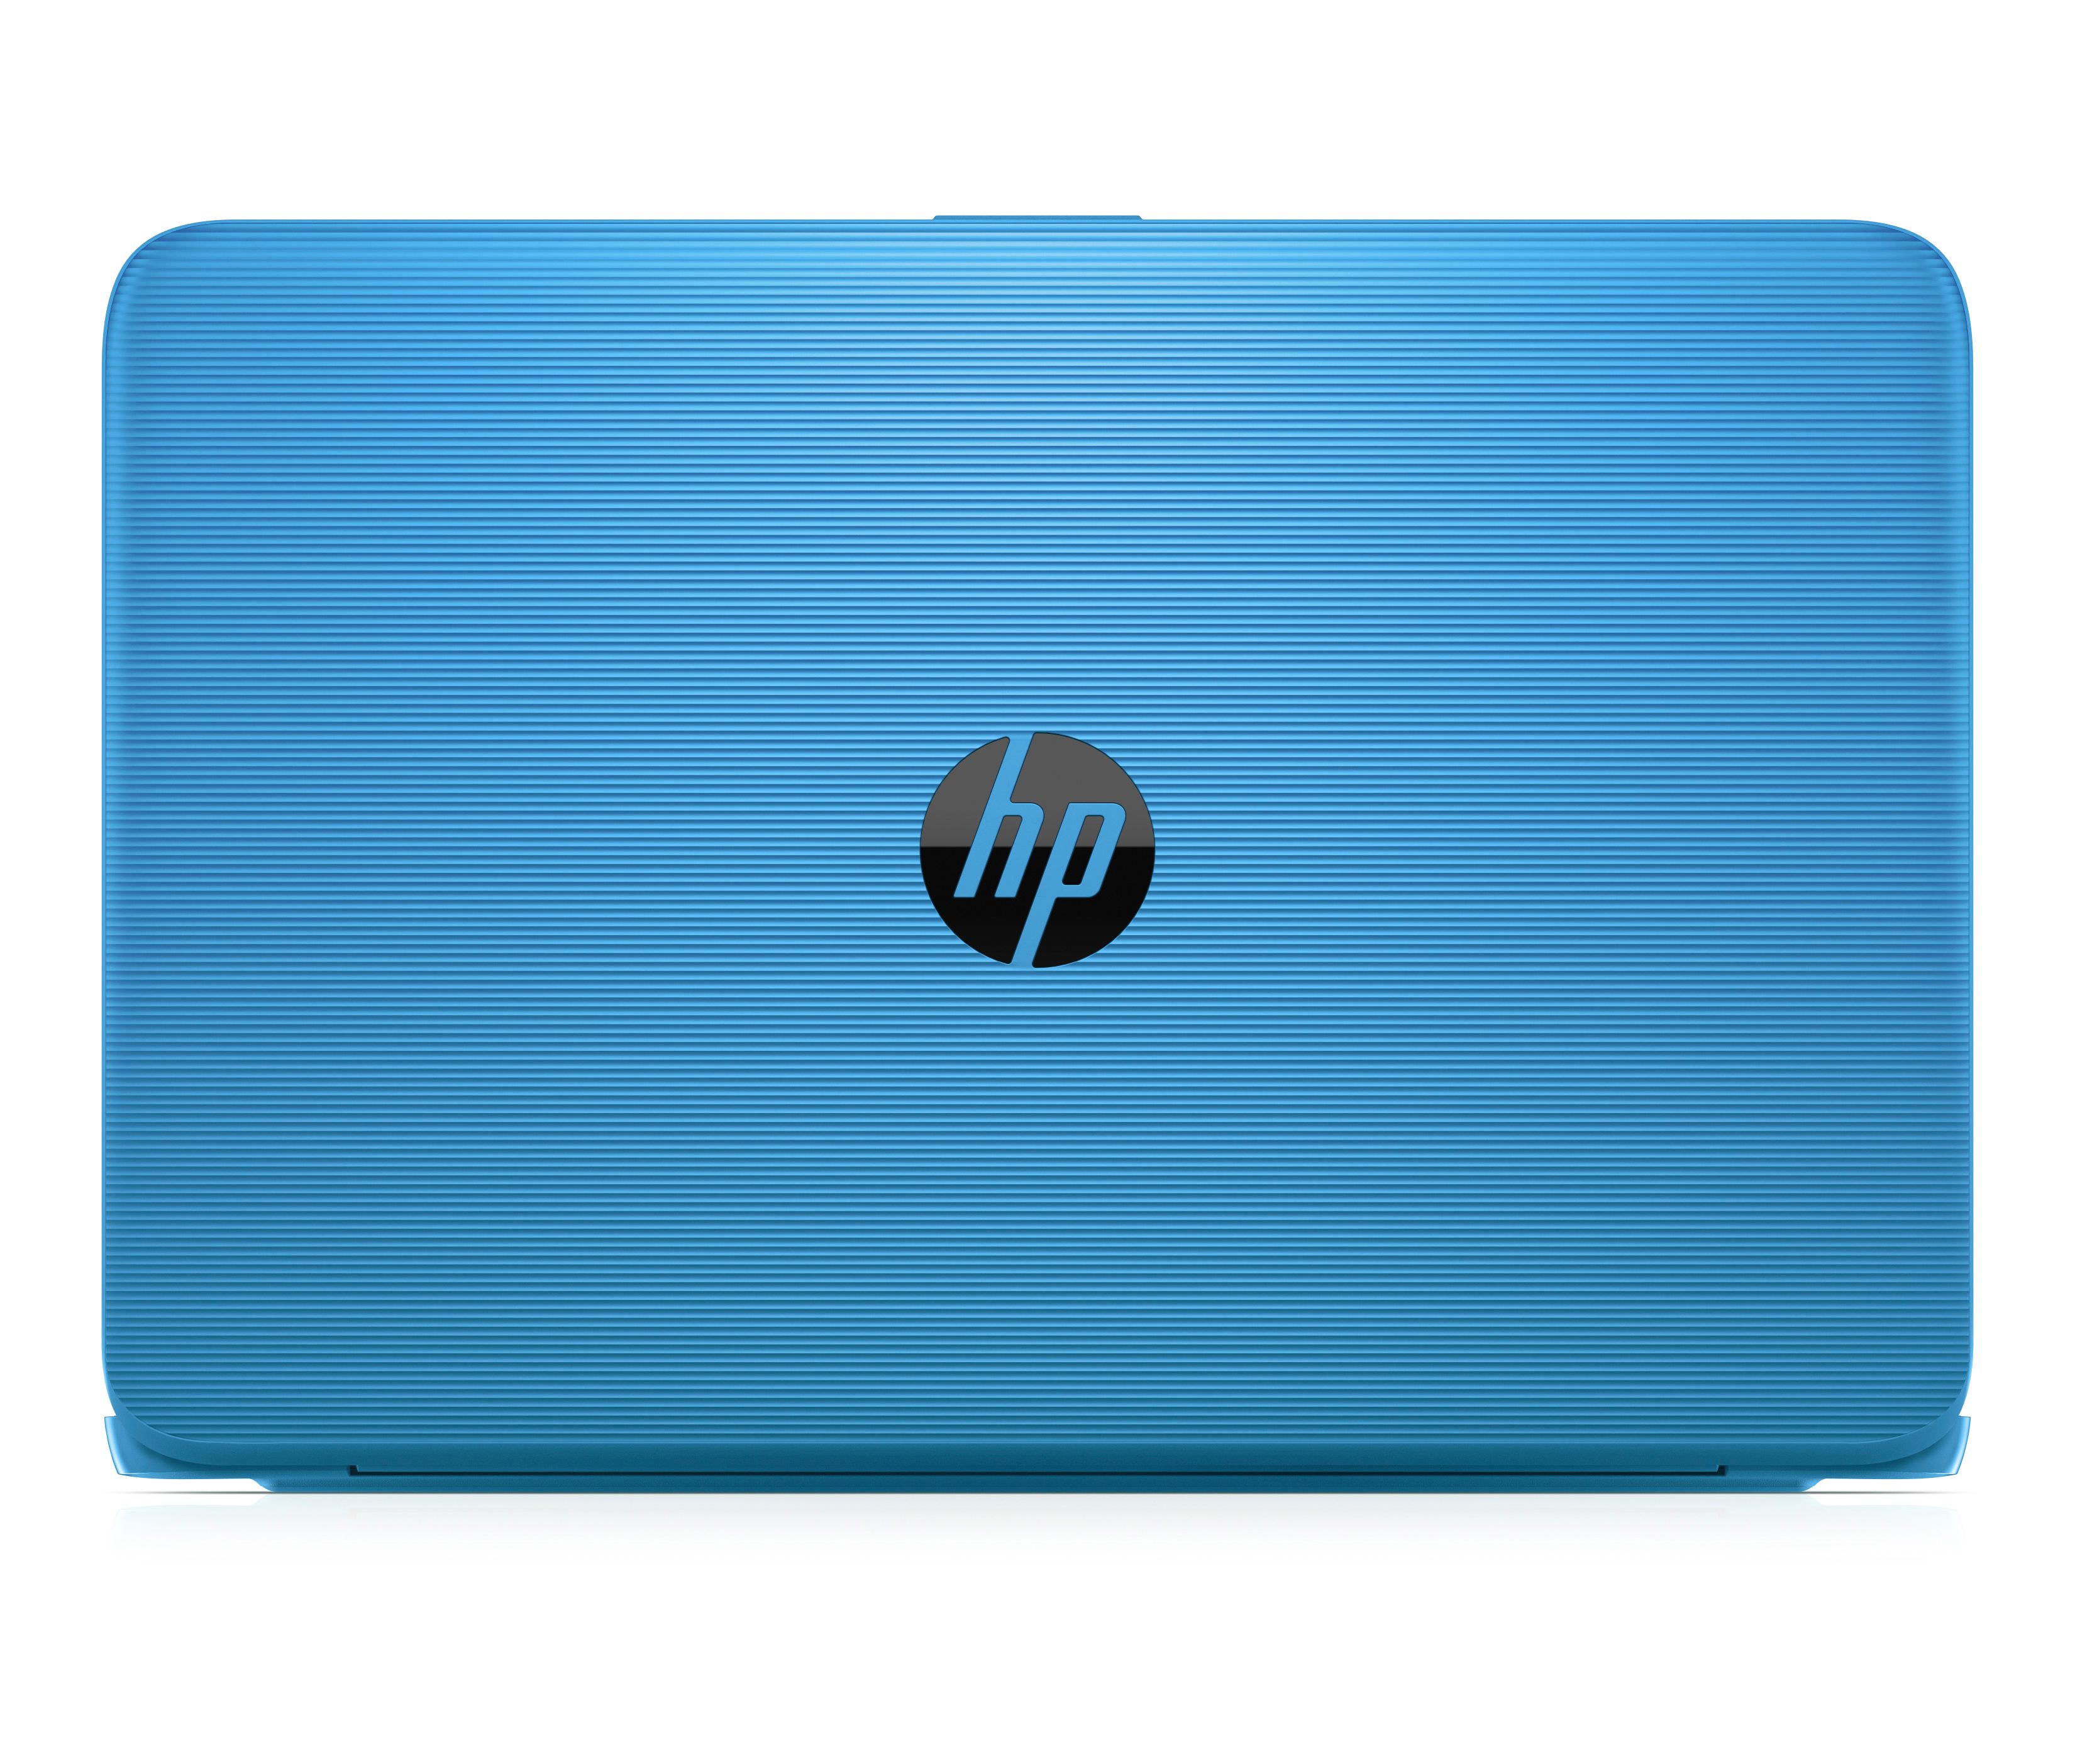 HP Stream 14-cb011wm, 14" HD Display, Intel N3060, 4GB RAM, 32GB SSD, Windows 10 Home S Mode, Blue - image 4 of 5